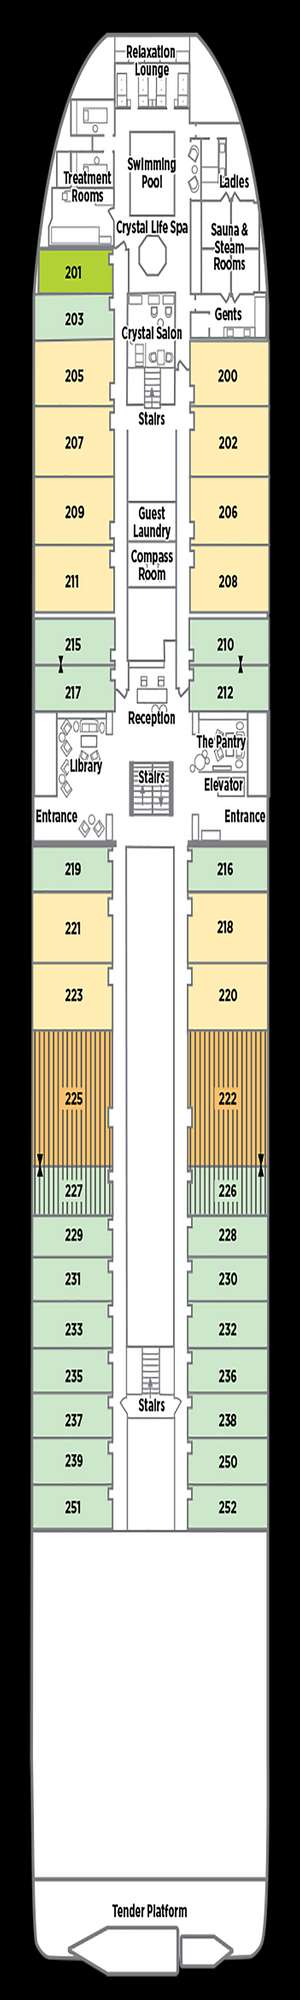 Deck plan for Crystal Mozart